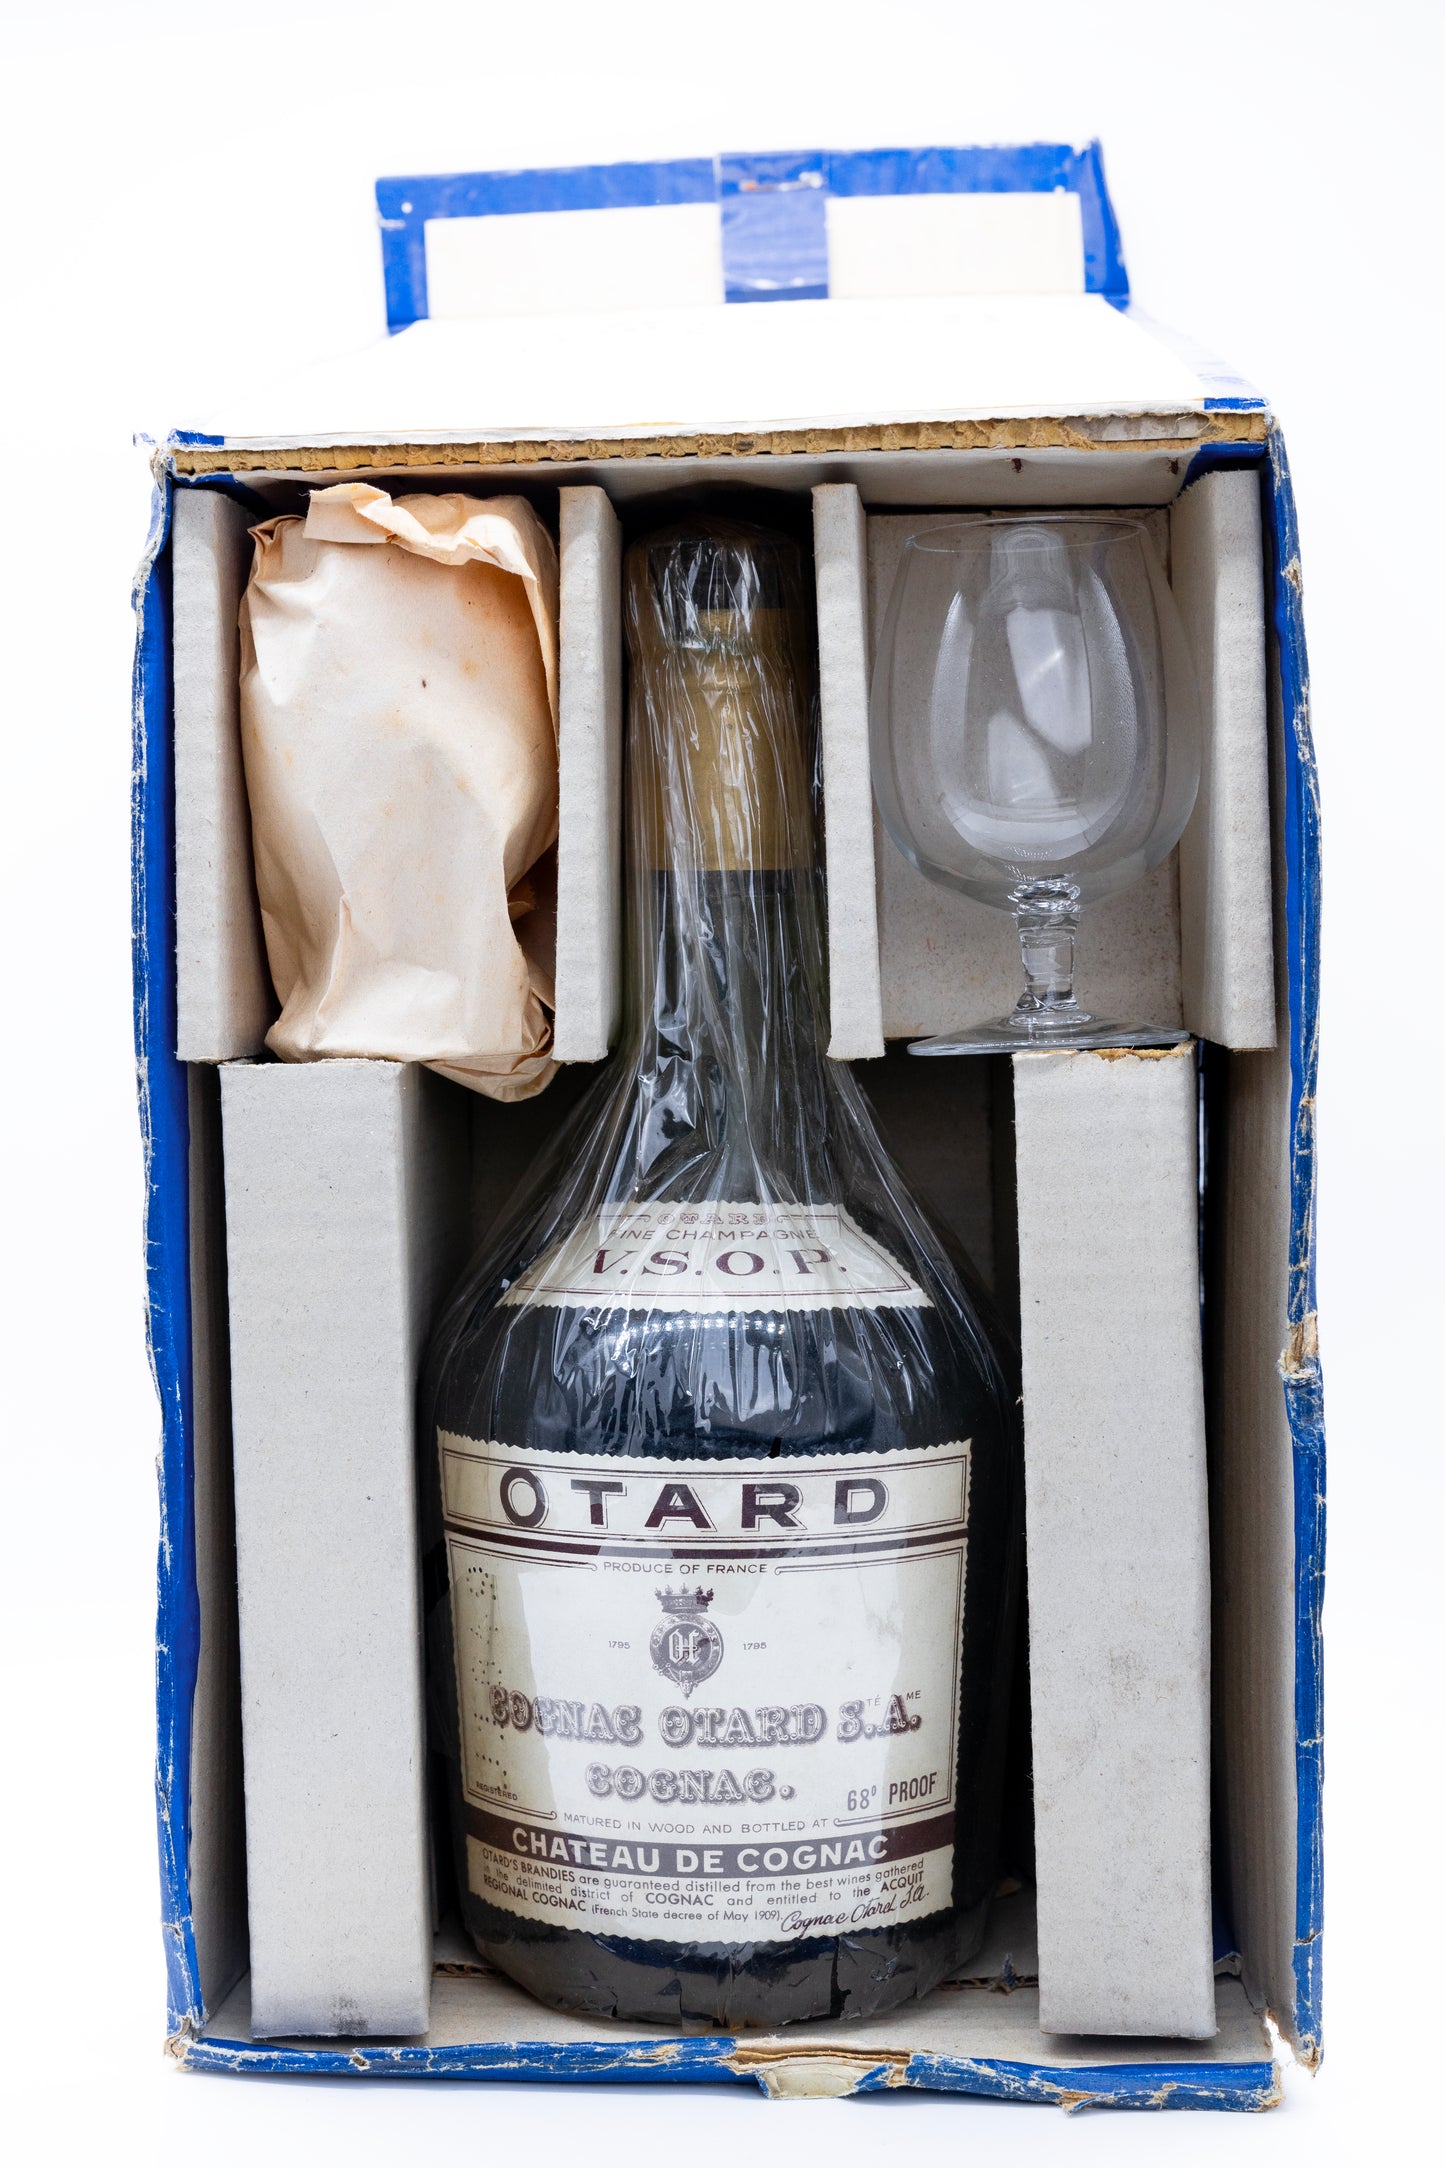 Otard VSOP Cognac 1950’s with glasses